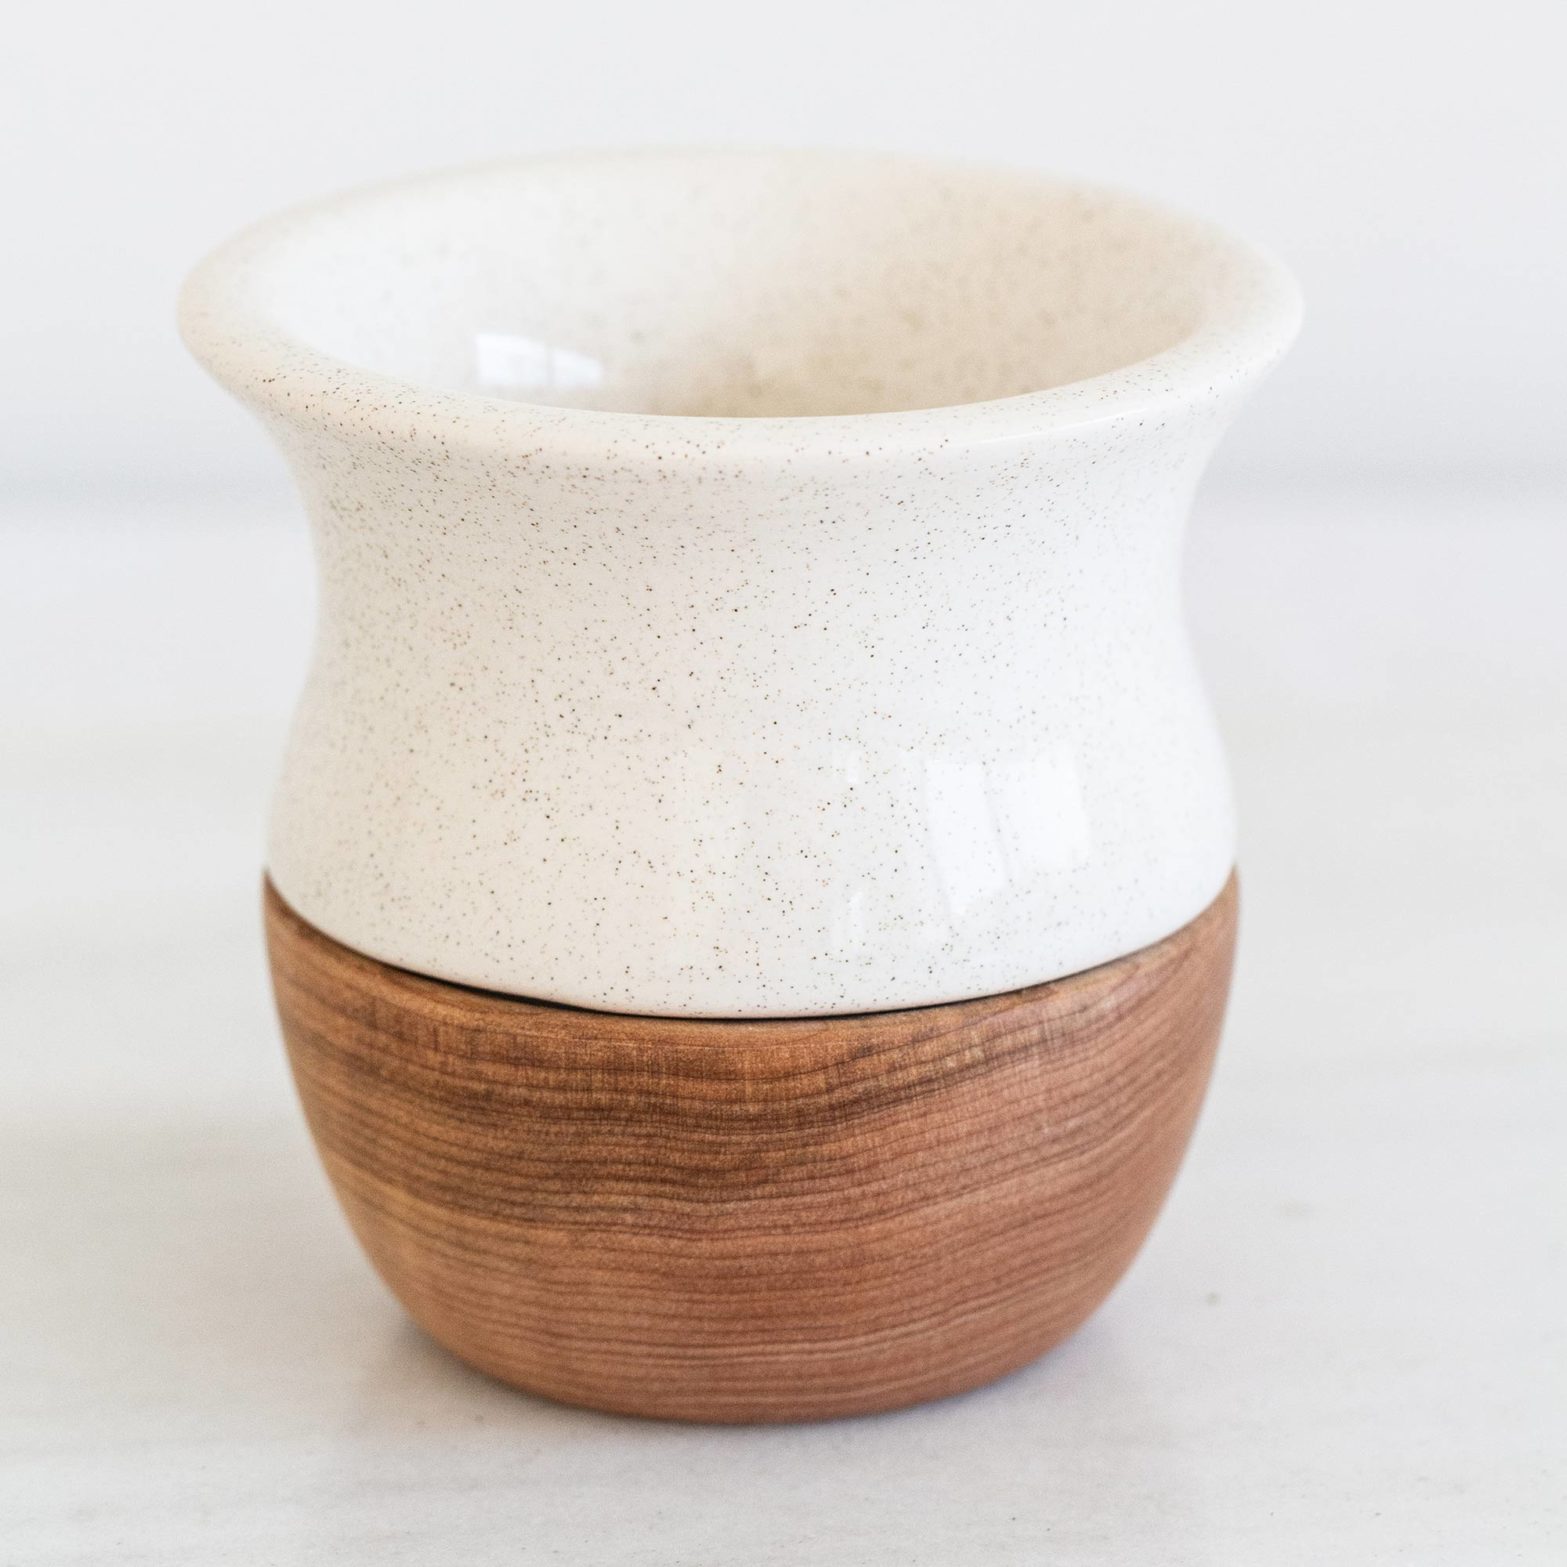 Osprey Capital Cup Original - Wooden Ceramic Yerba Mate Cup